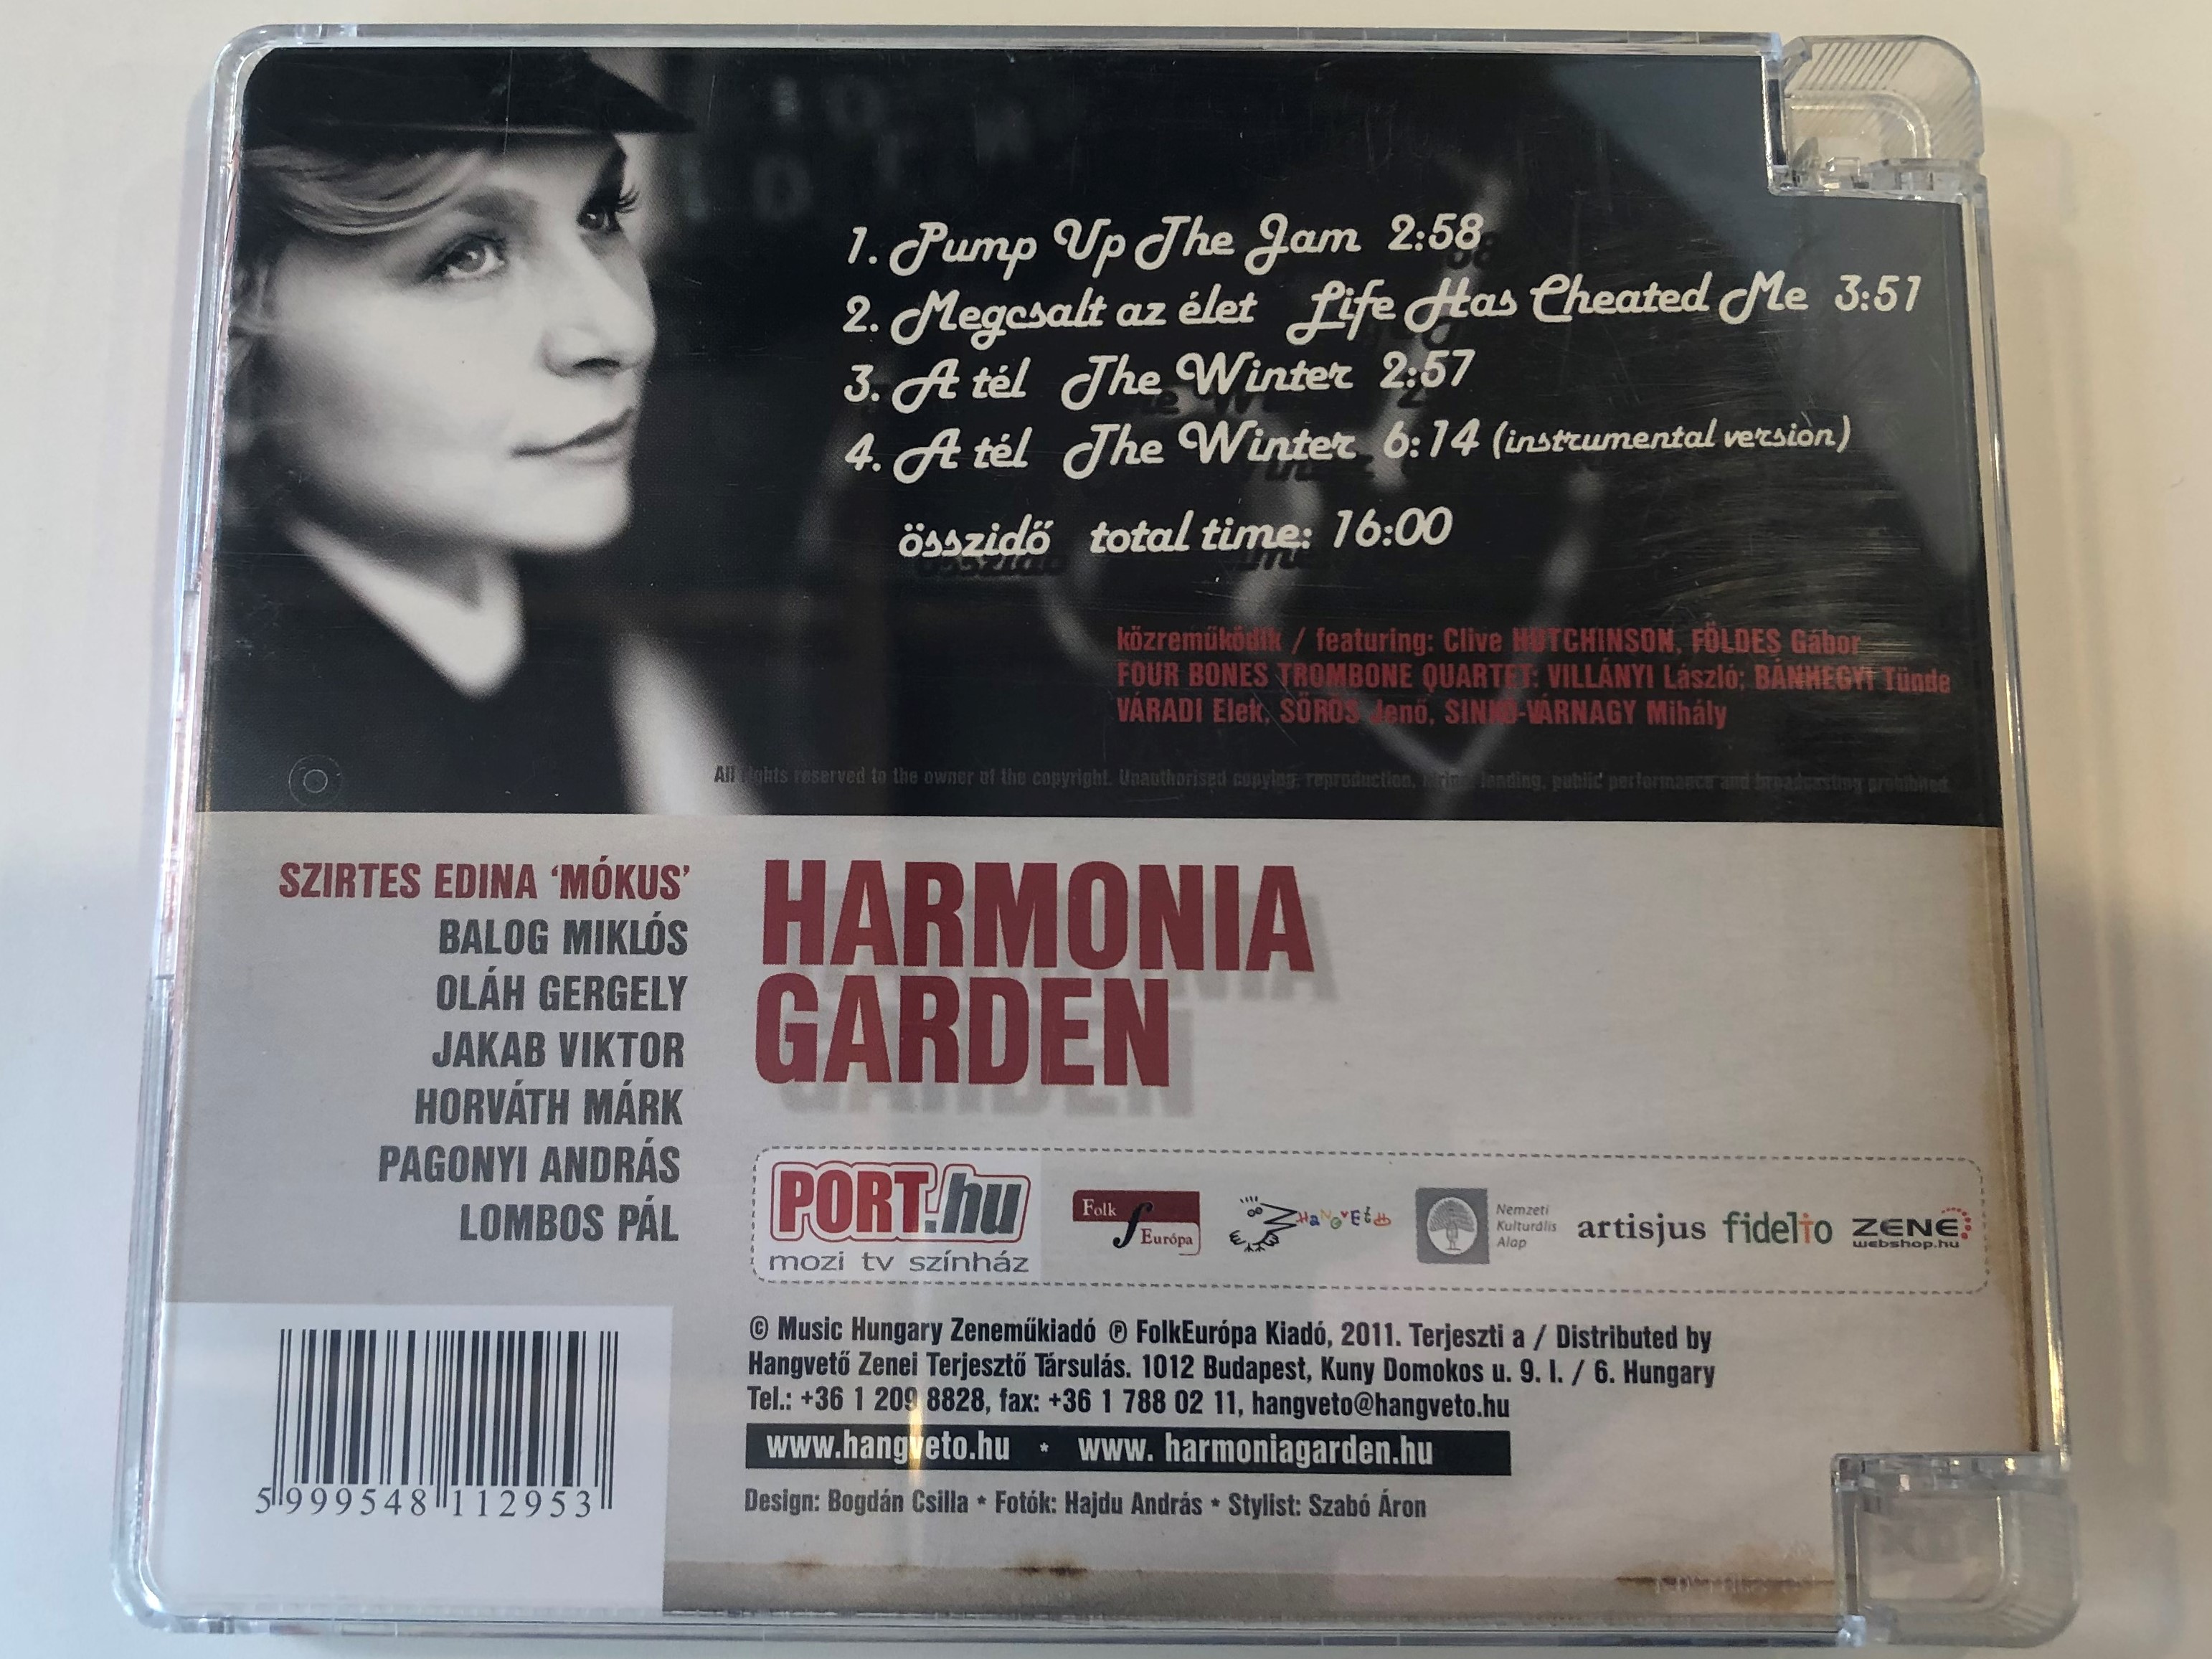 pump-up-the-jam-harmonia-garden-szirtes-edina-mokus-folkeuropa-kiado-audio-cd-2011-5999548112953-4-.jpg